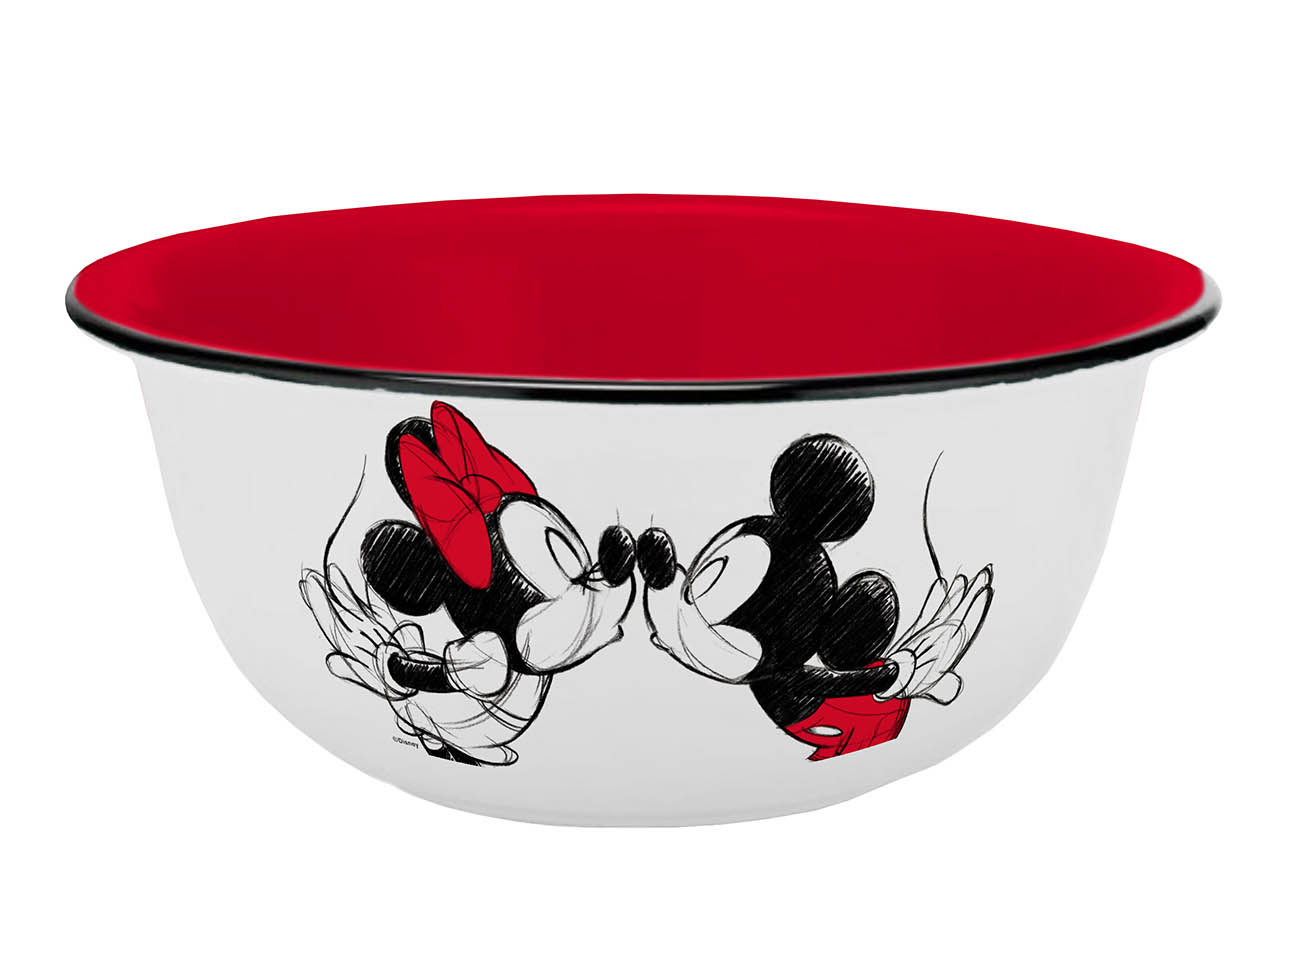 Tasse Micky Maus (Mickey Mouse) - Vintage Big